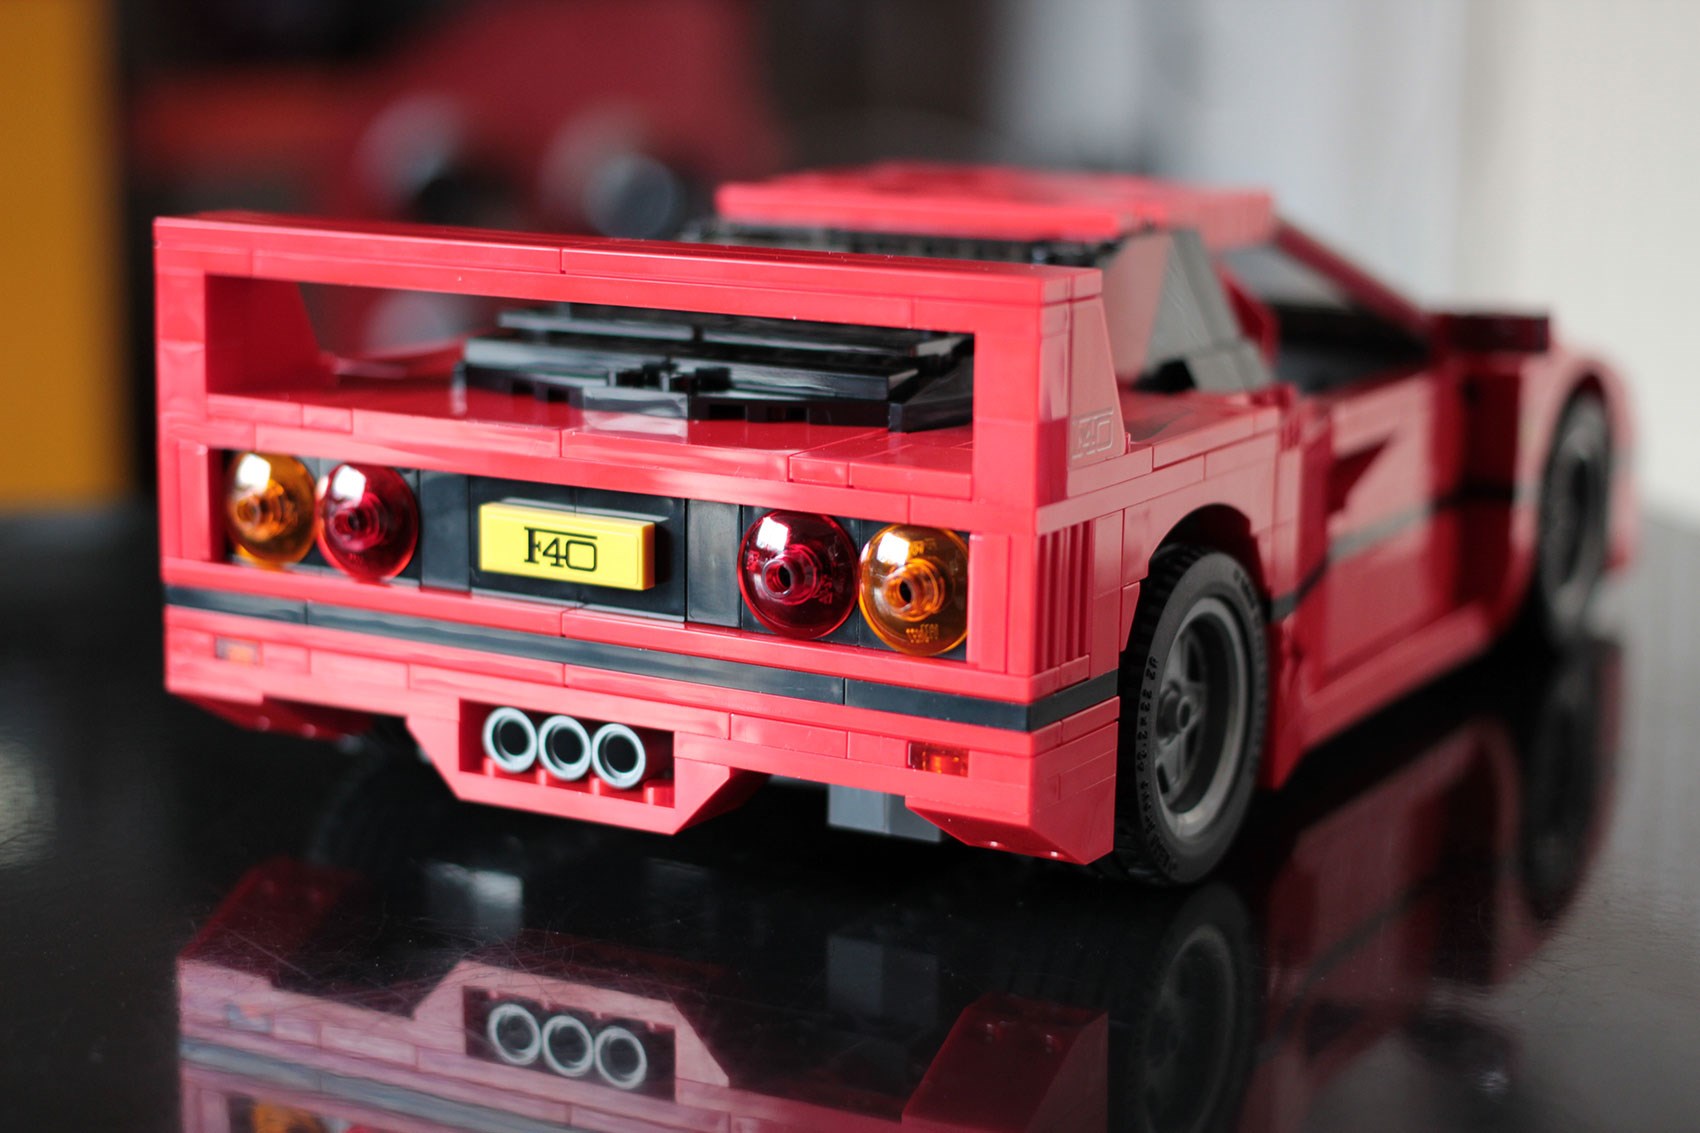 This Lego Creation Is a Perfect Replica of Ferrari's 2016 F1 Car